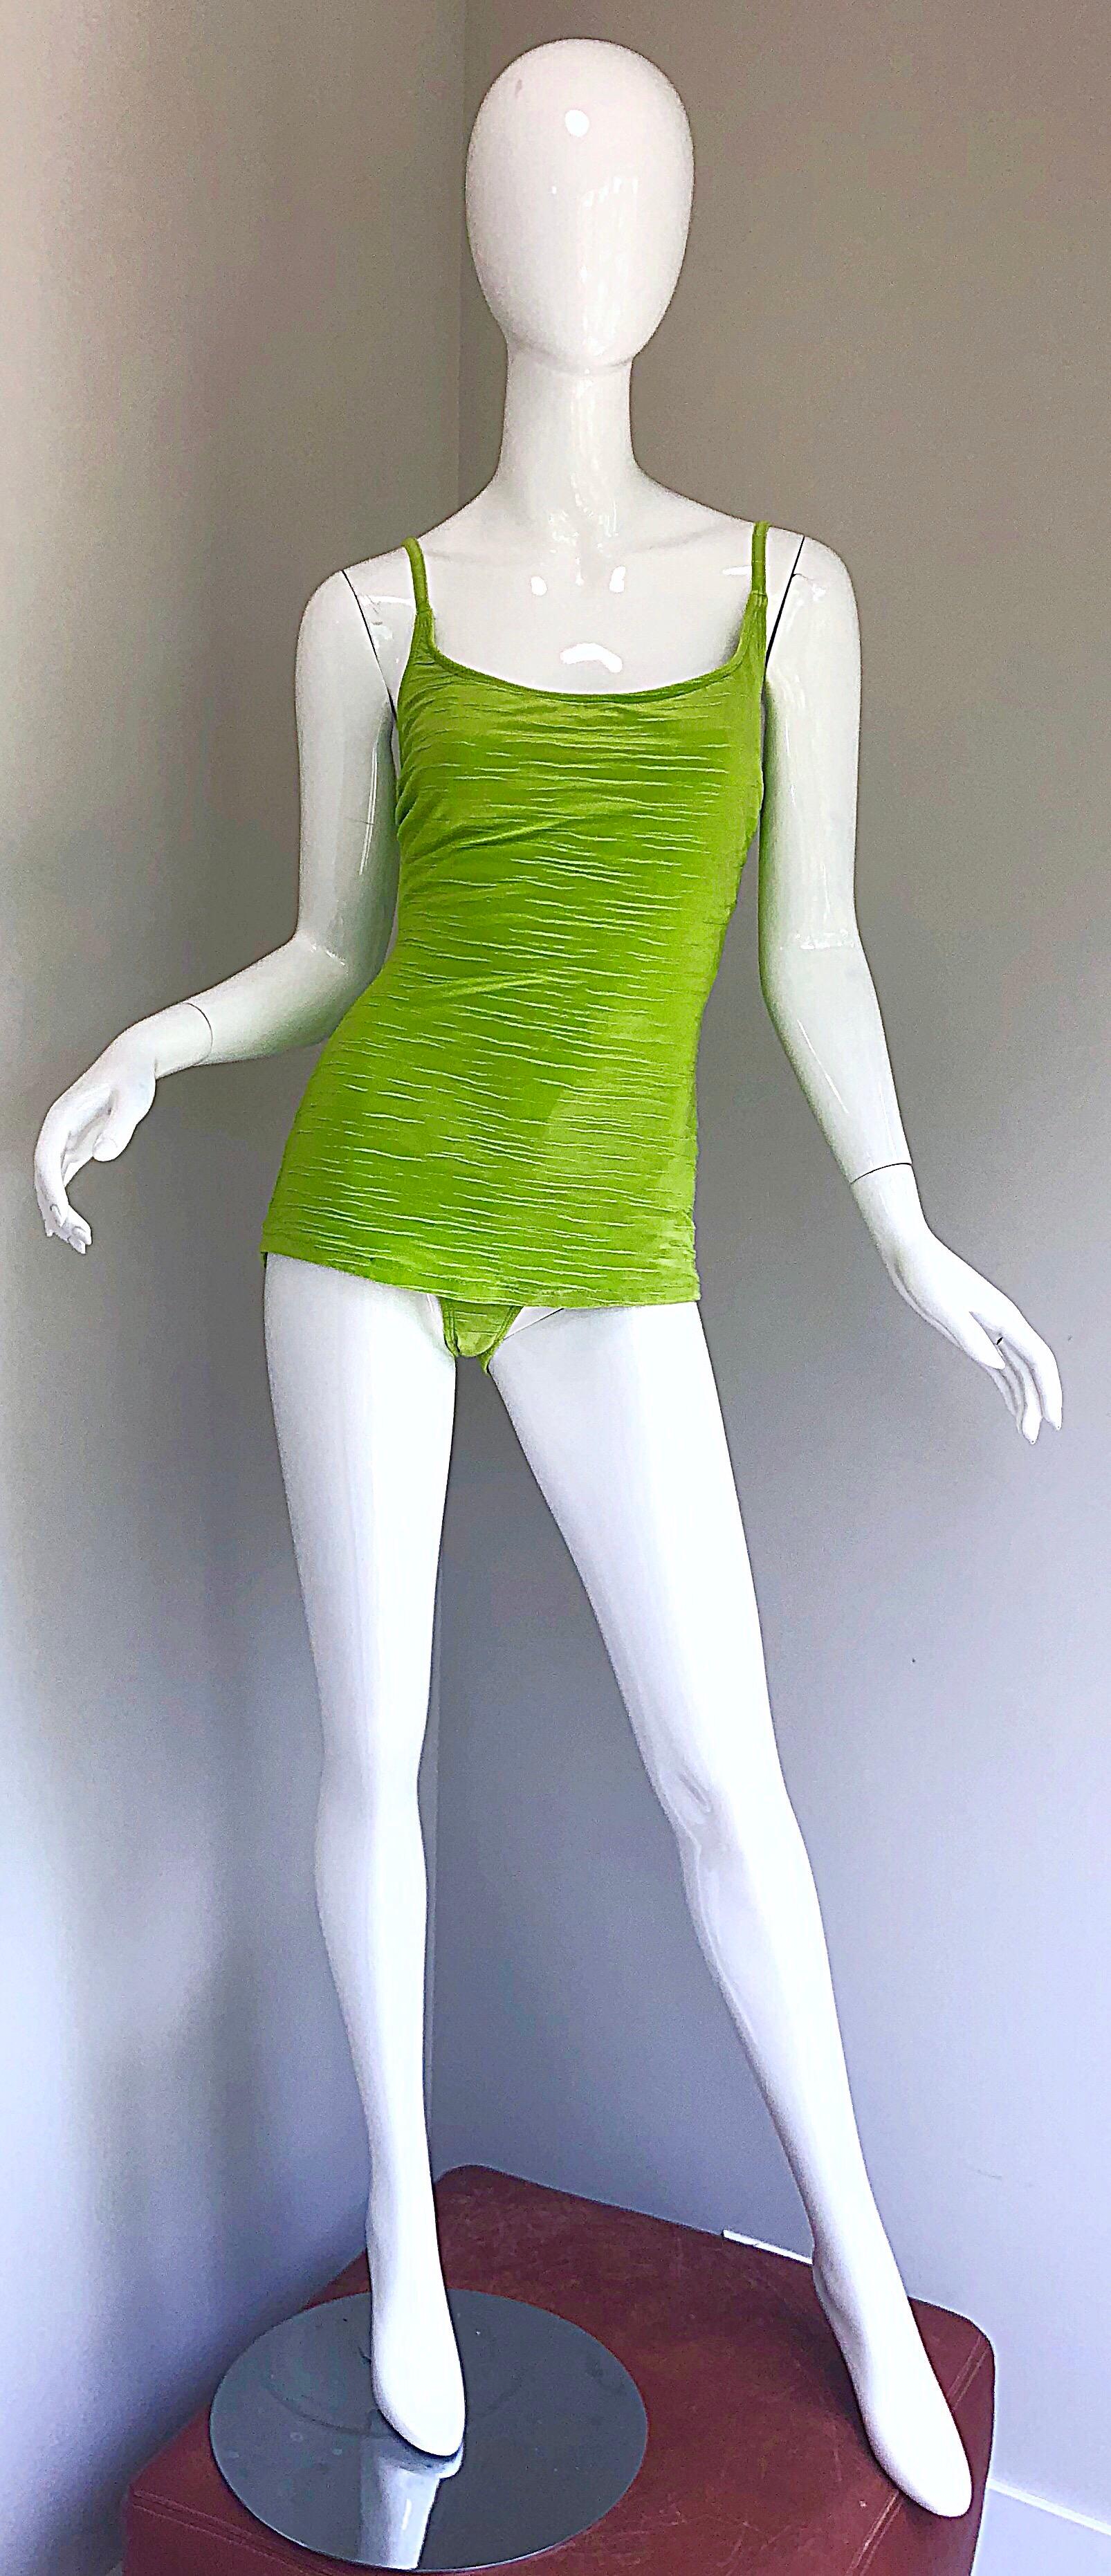 Size 14 Oscar de la Renta Neon Lime Green One Piece 60s Style Swimsuit Bodysuit For Sale 7